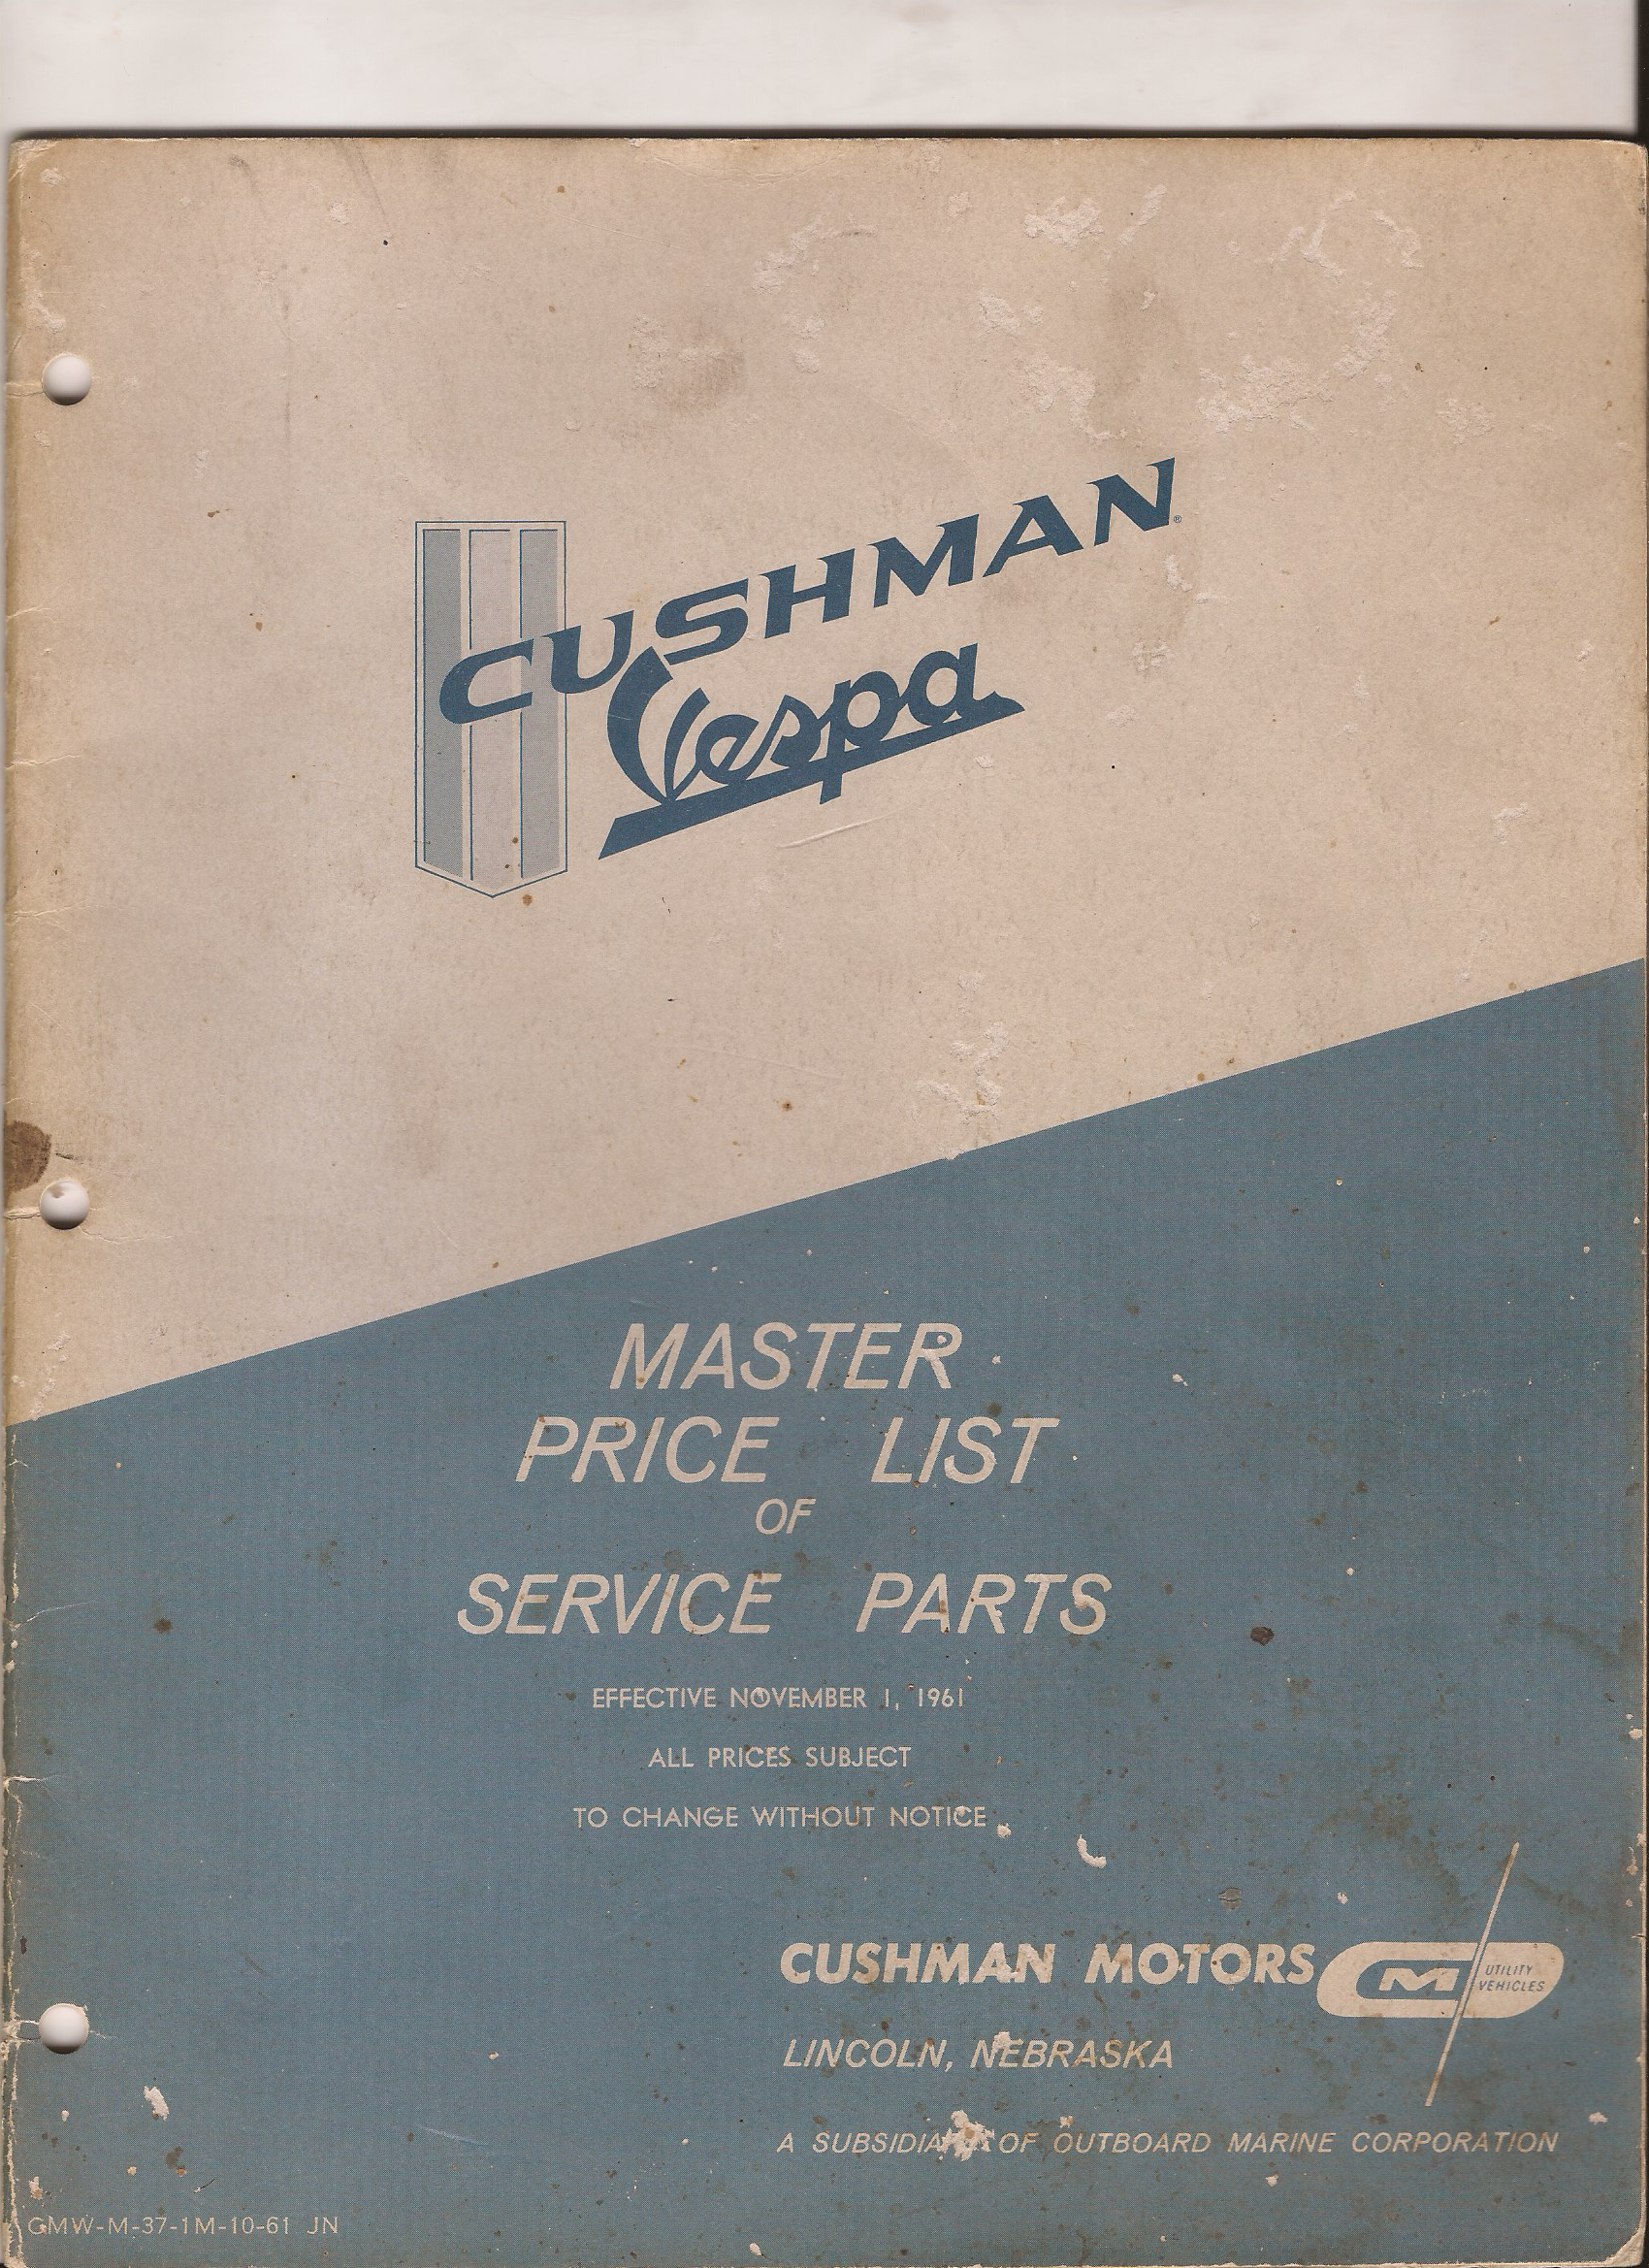 02-04-2016 Cushman Vespa Master parts list.png